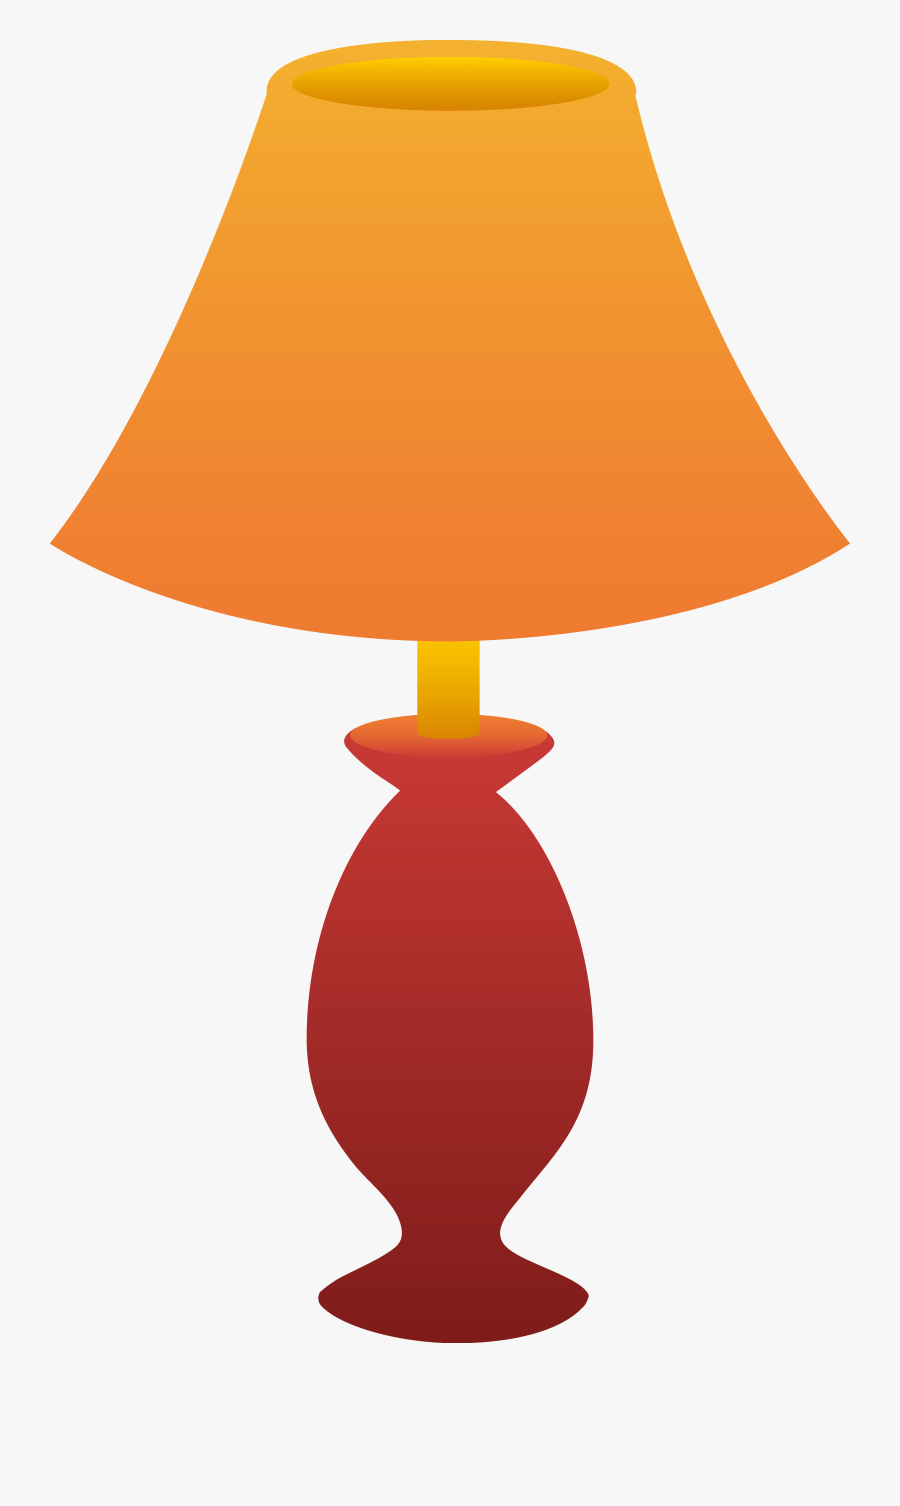 Standard Lamp Clipart Clipground Floor Lamp Clip Art - Lamps Clipart, Transparent Clipart